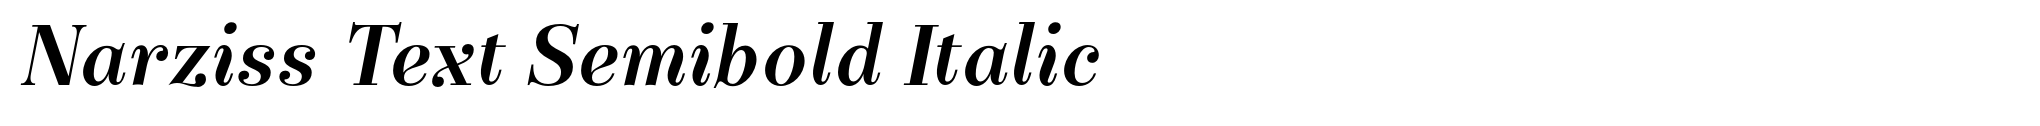 Narziss Text Semibold Italic image